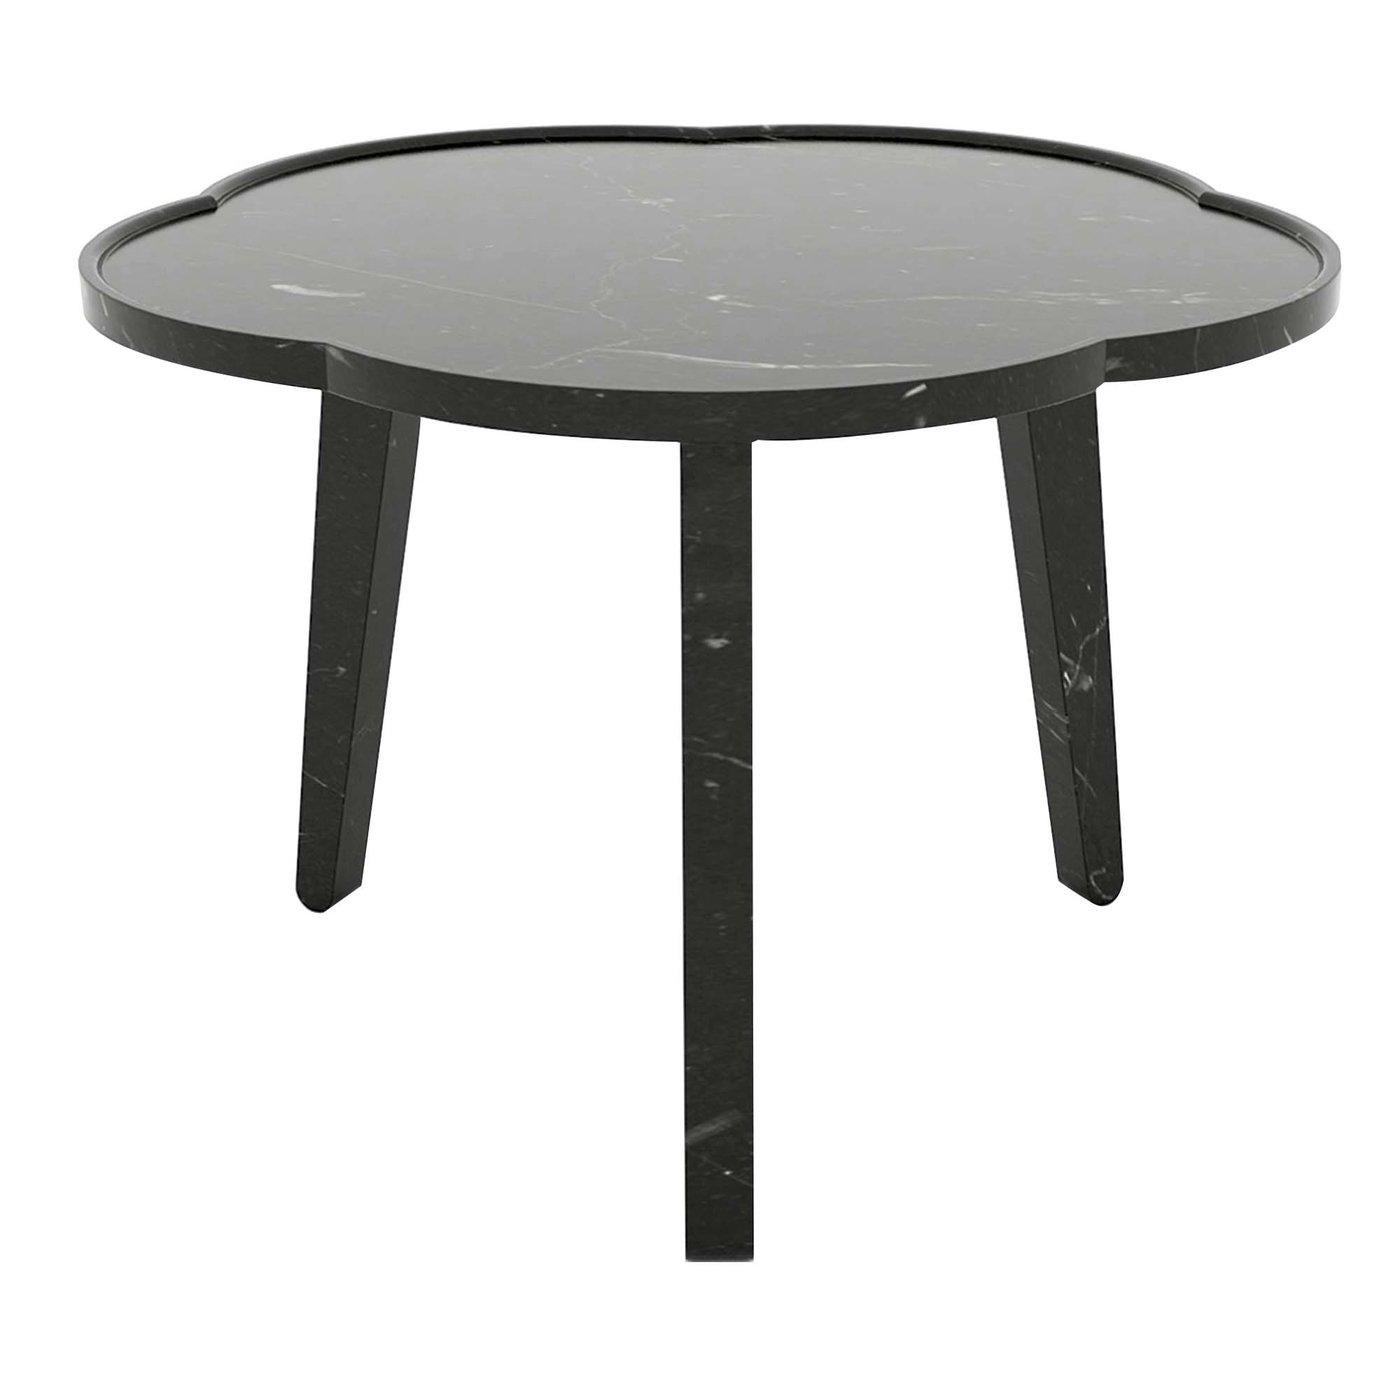 Italian Black Soya Low Table, Design Claesson Koivisto Rune, 2013